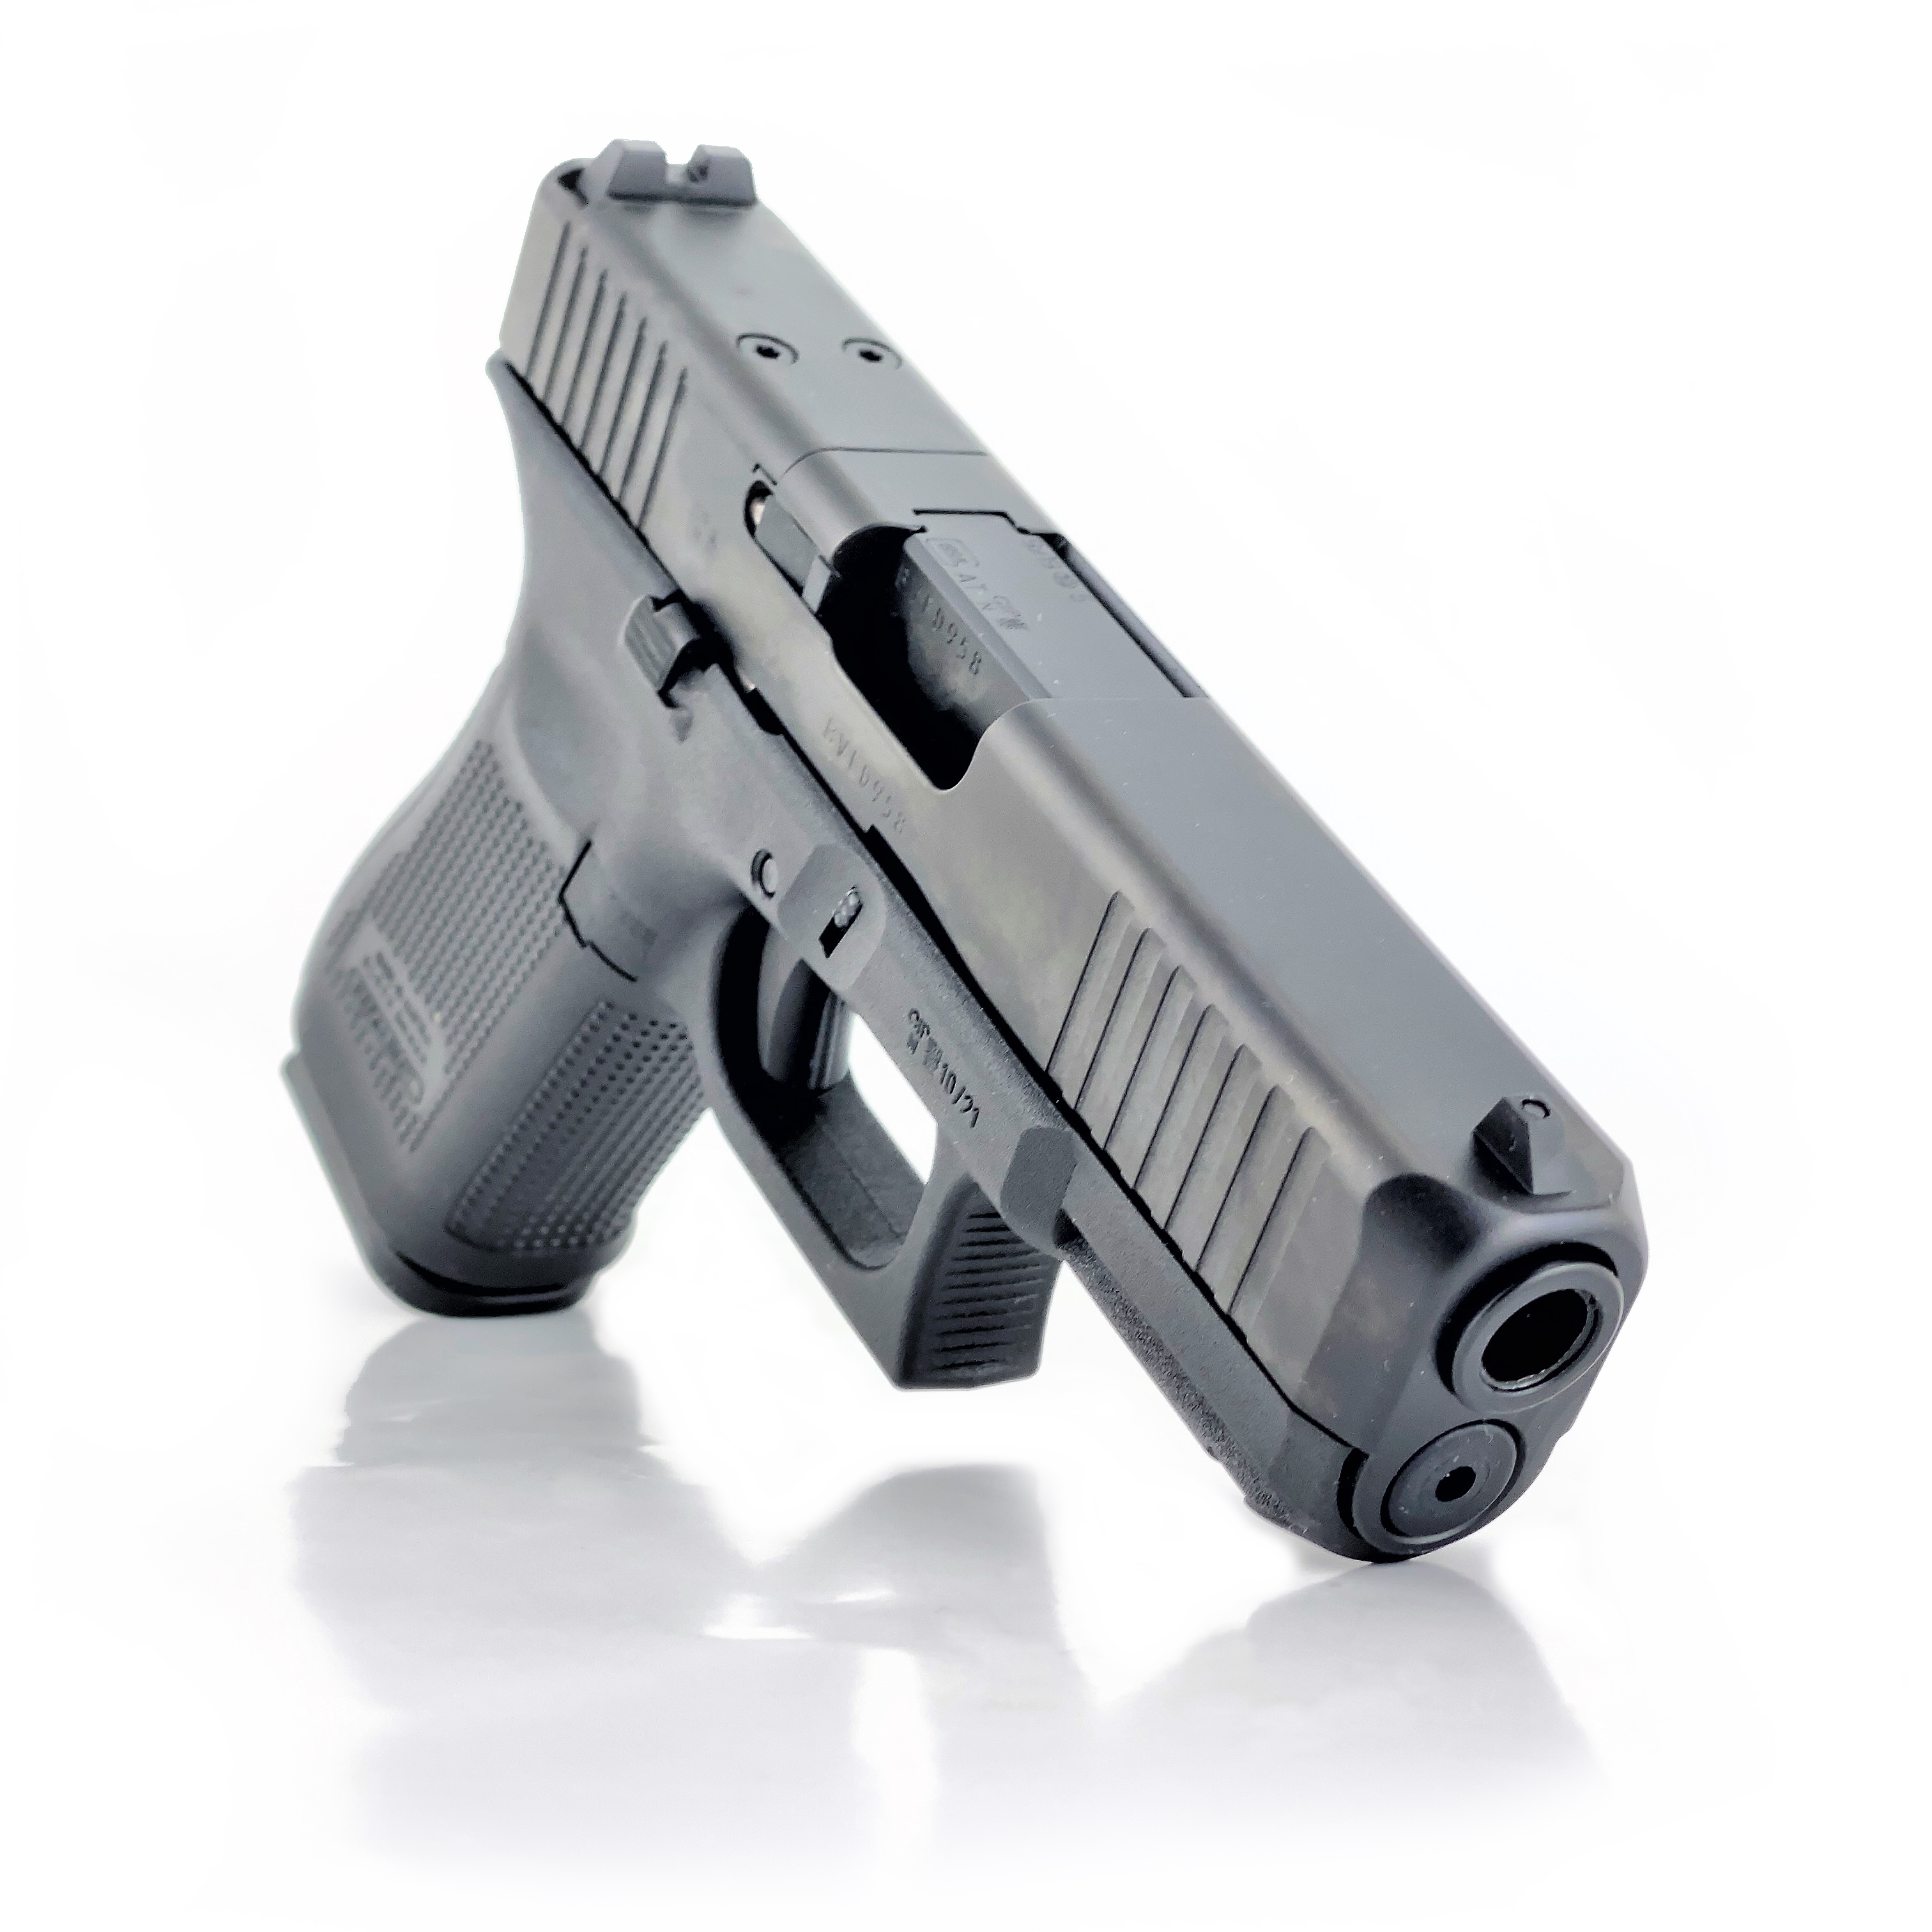 Glock 19 gen 5 optical ready kaufen | F,A,S,T. onlineshop